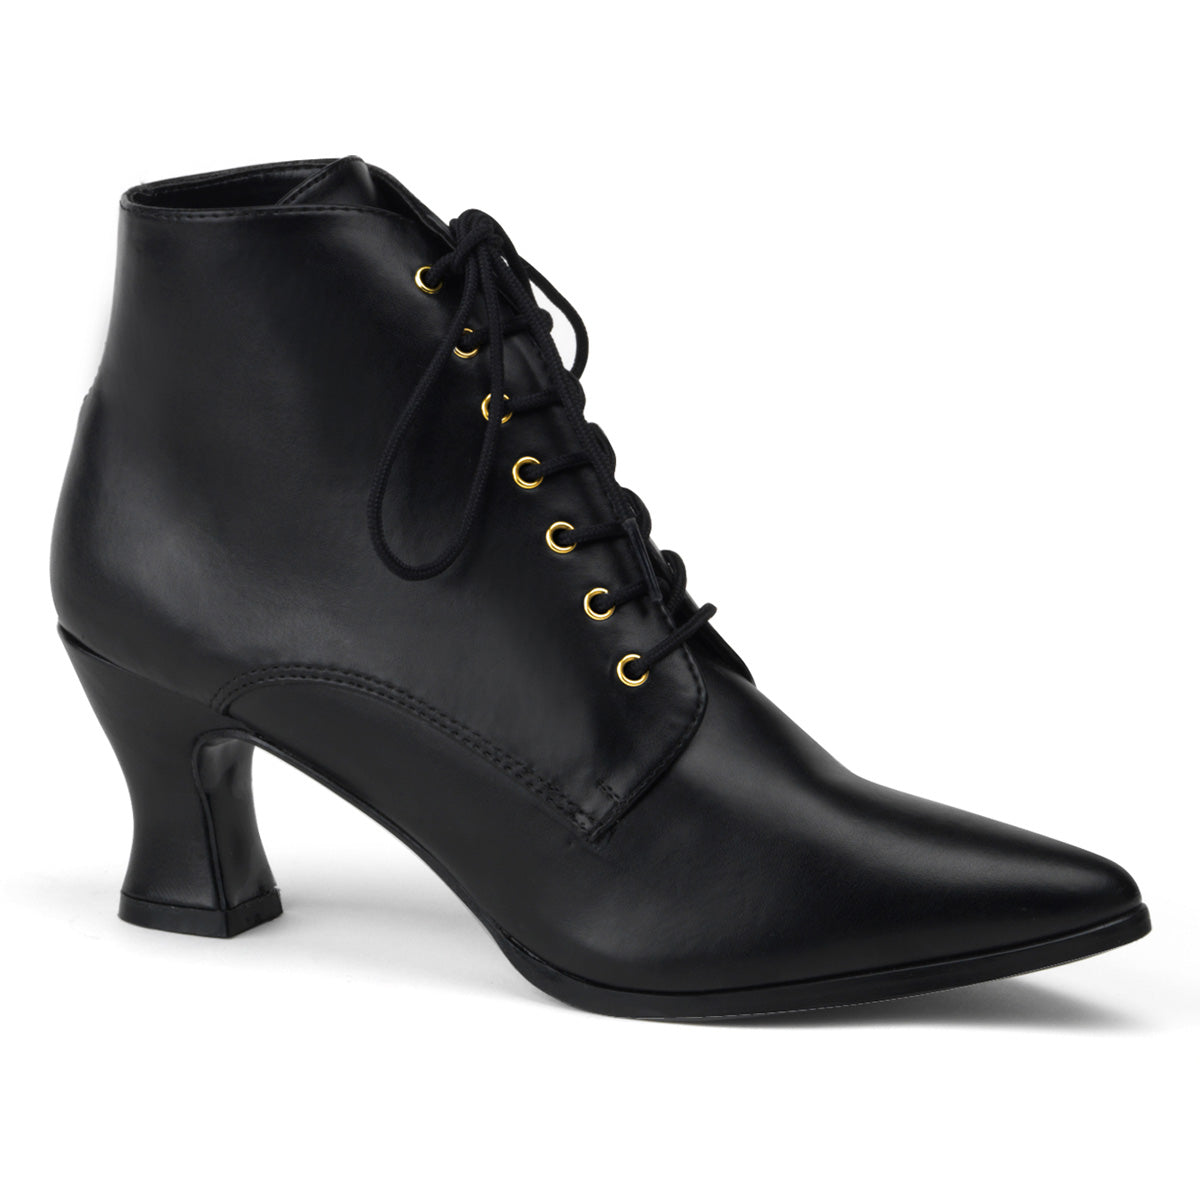 VICTORIAN-35 3 Inch Heel Black Women's Boots Funtasma Costume Shoes